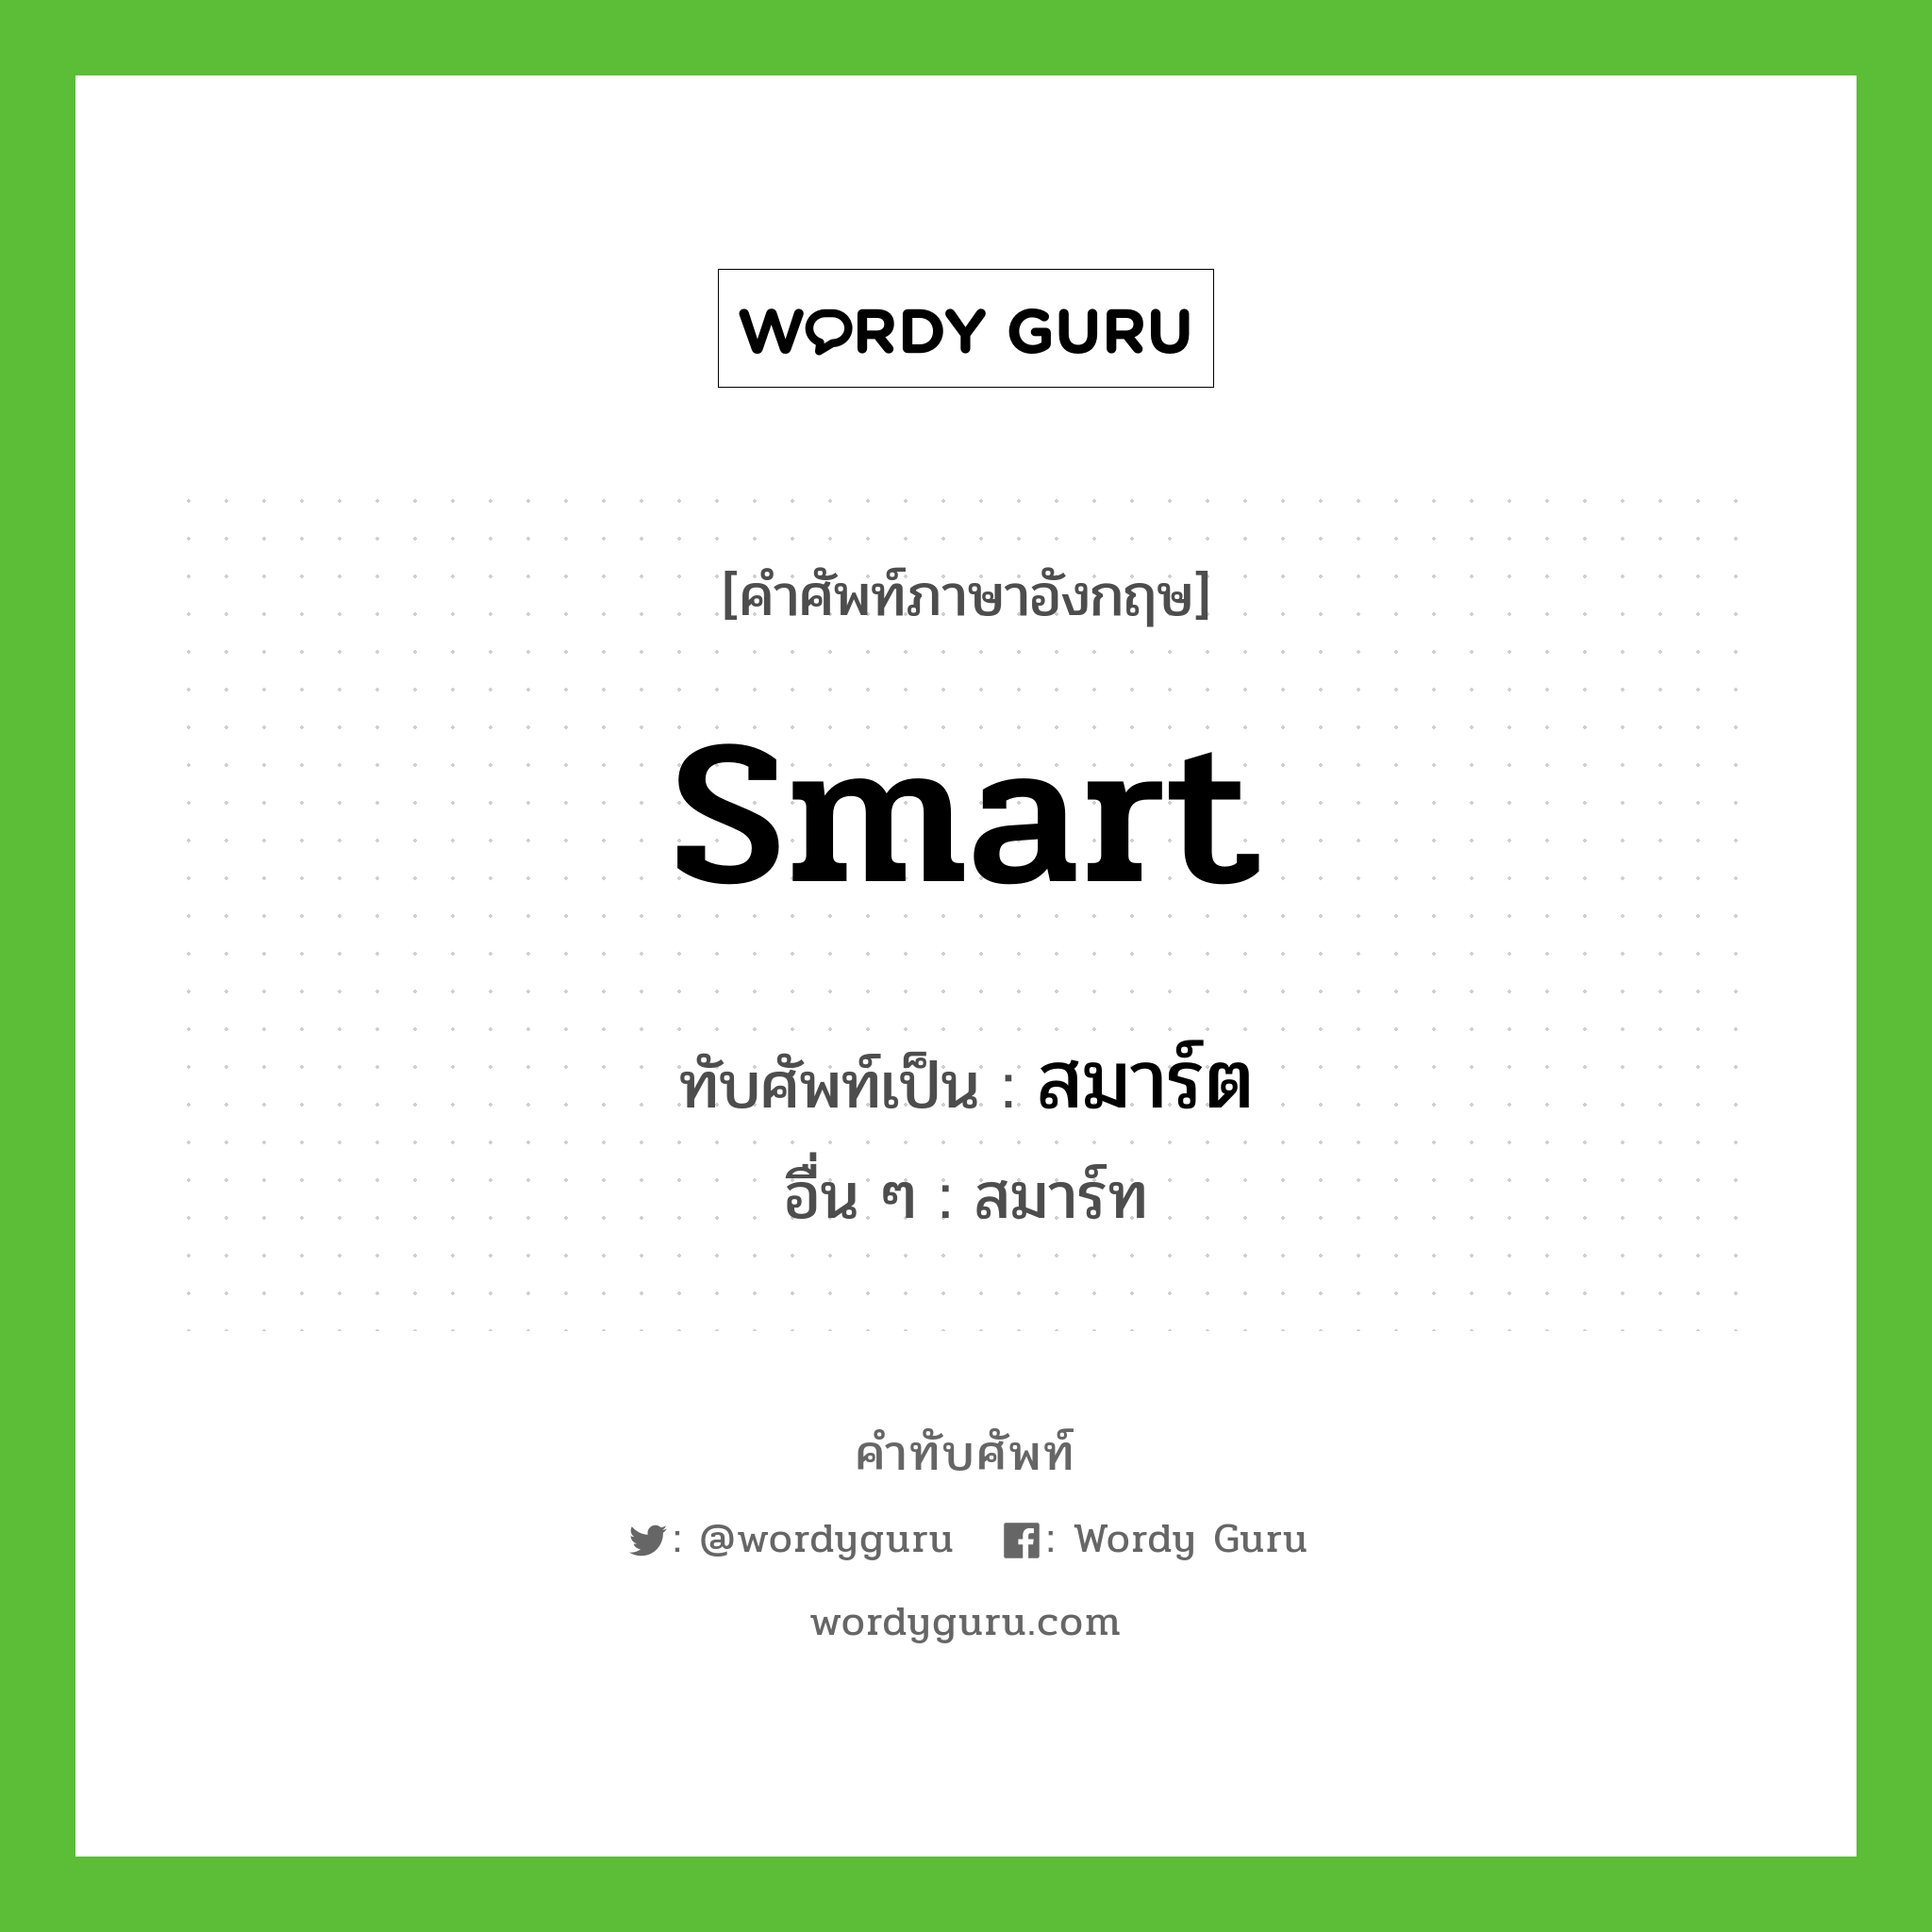 smart เขียนเป็นคำไทยว่าอะไร?, คำศัพท์ภาษาอังกฤษ smart ทับศัพท์เป็น สมาร์ต อื่น ๆ สมาร์ท